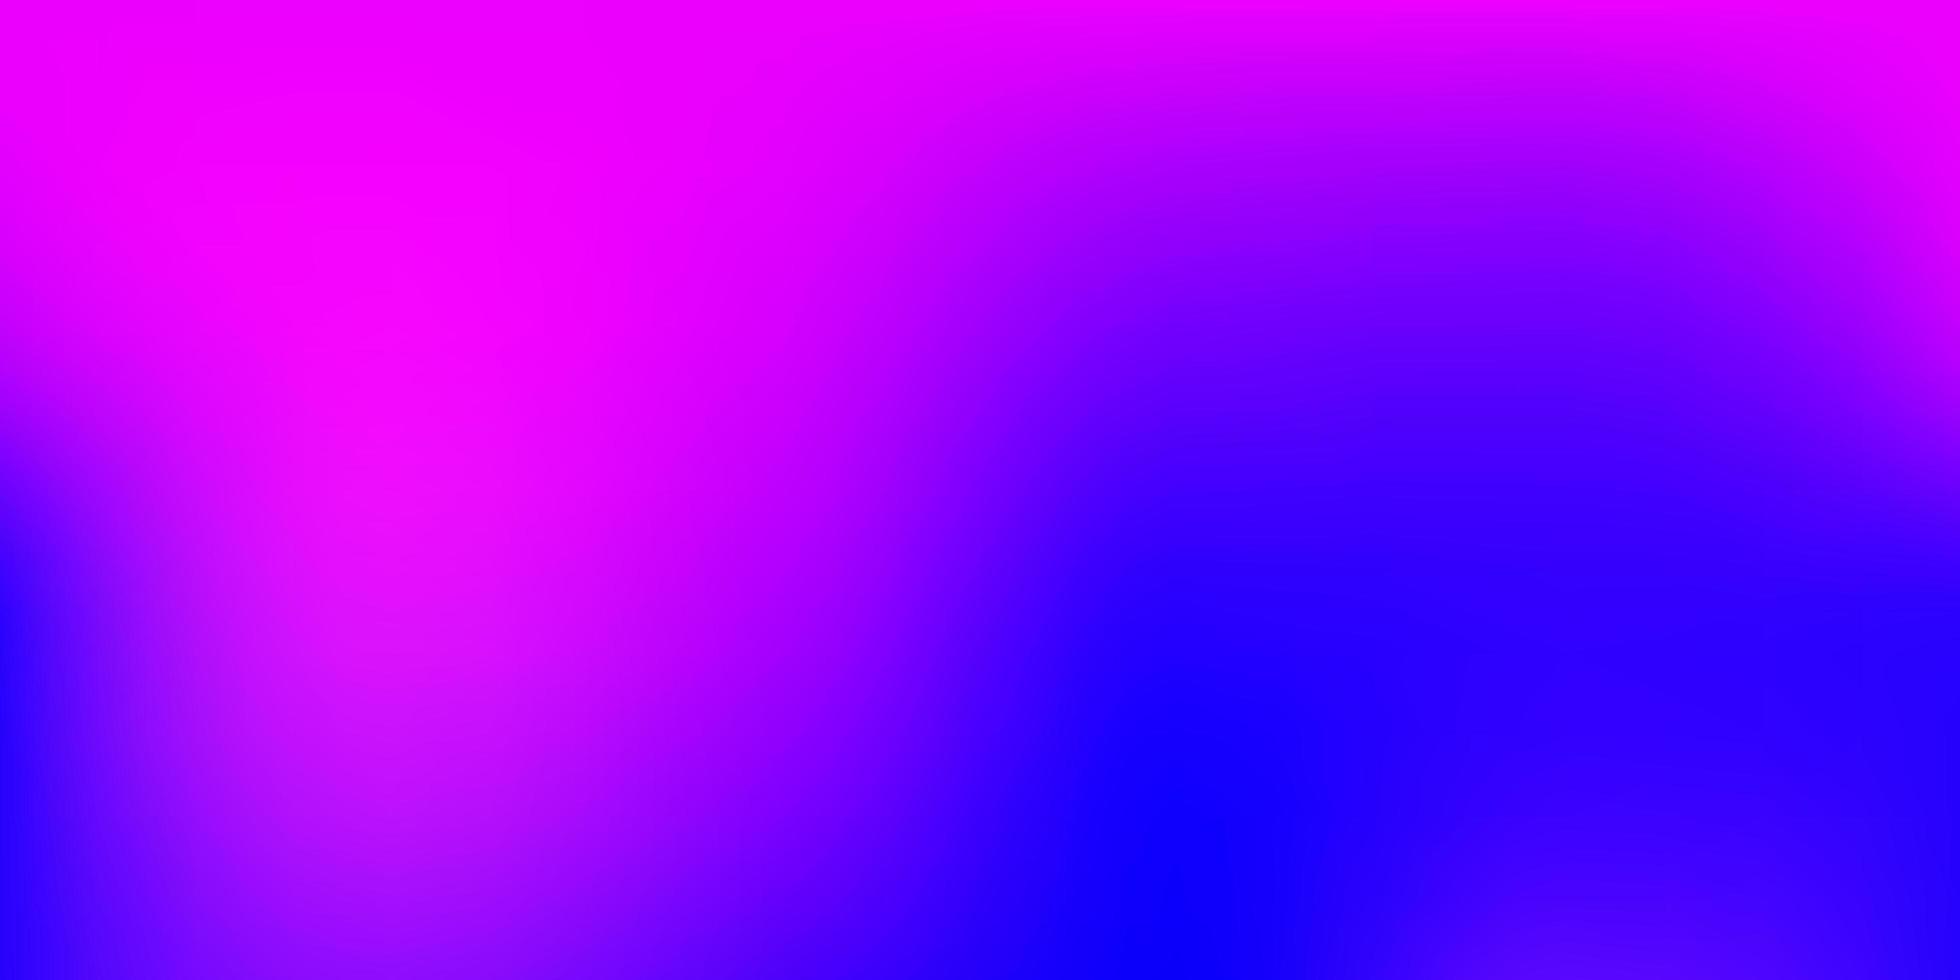 Light Pink, Blue vector gradient blur background.